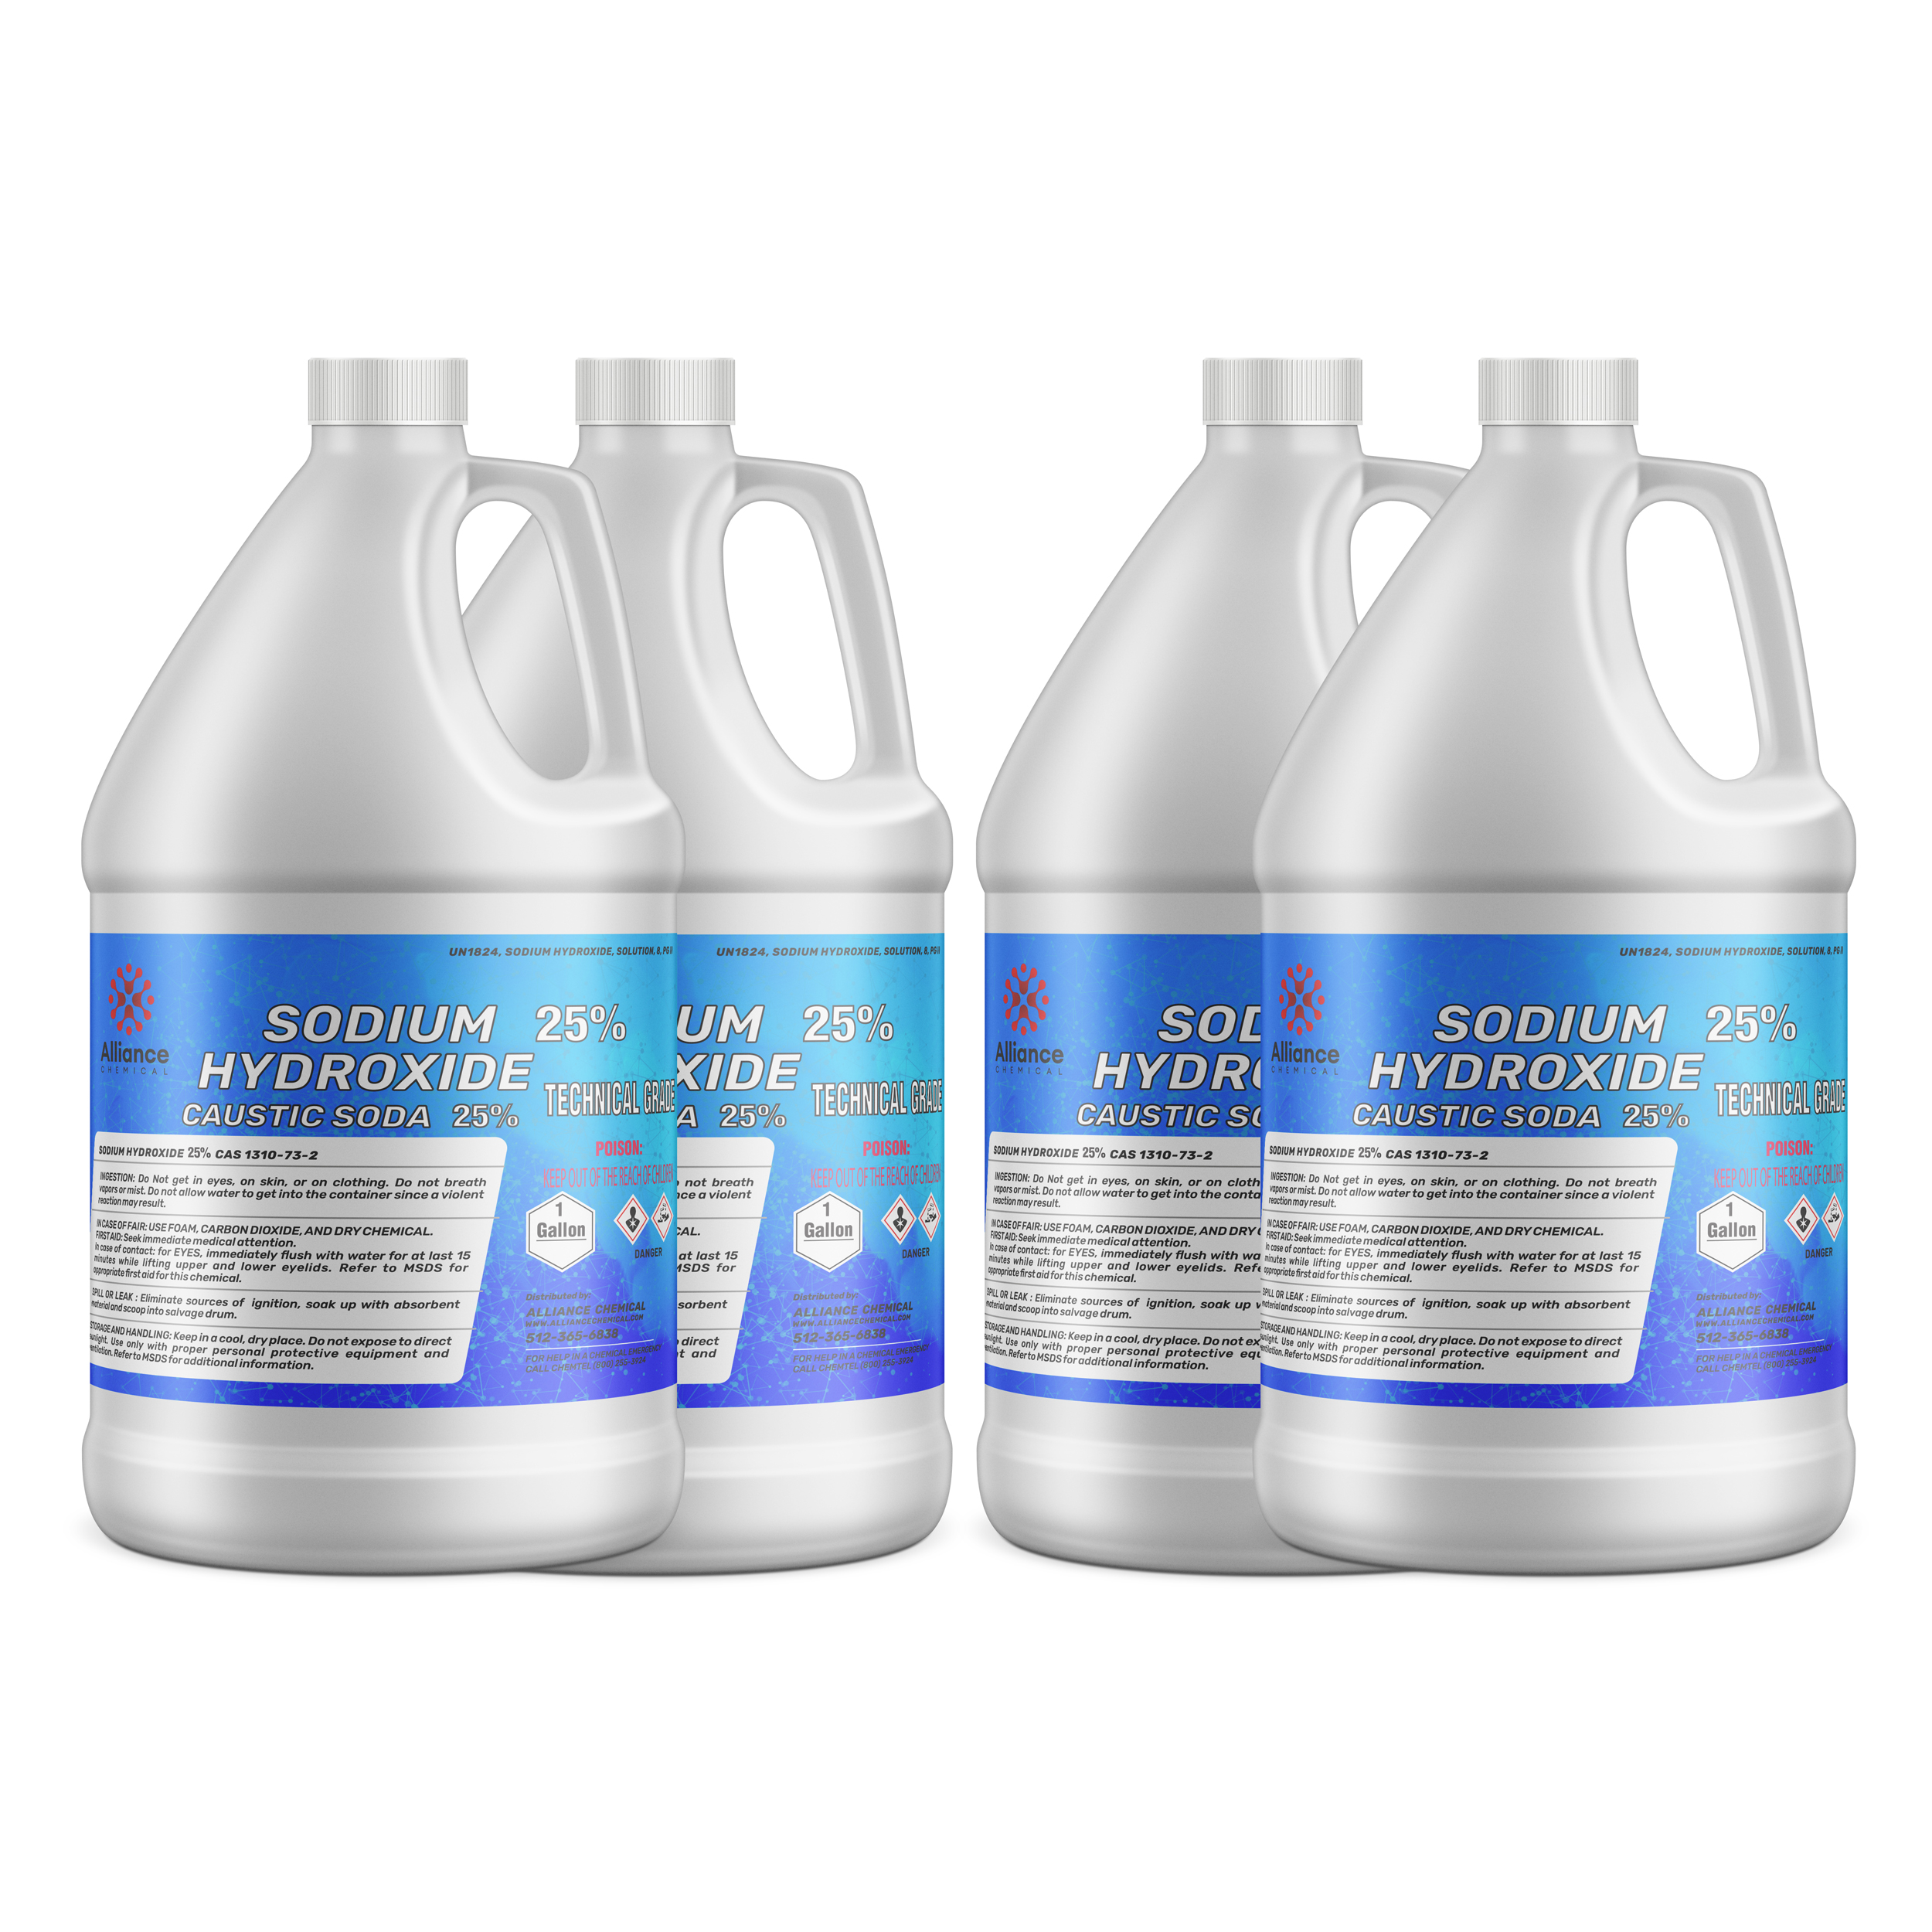 NaOH 'Sodium Hydroxide' - $25.00 : Hydrogen Garage, Water Smacker